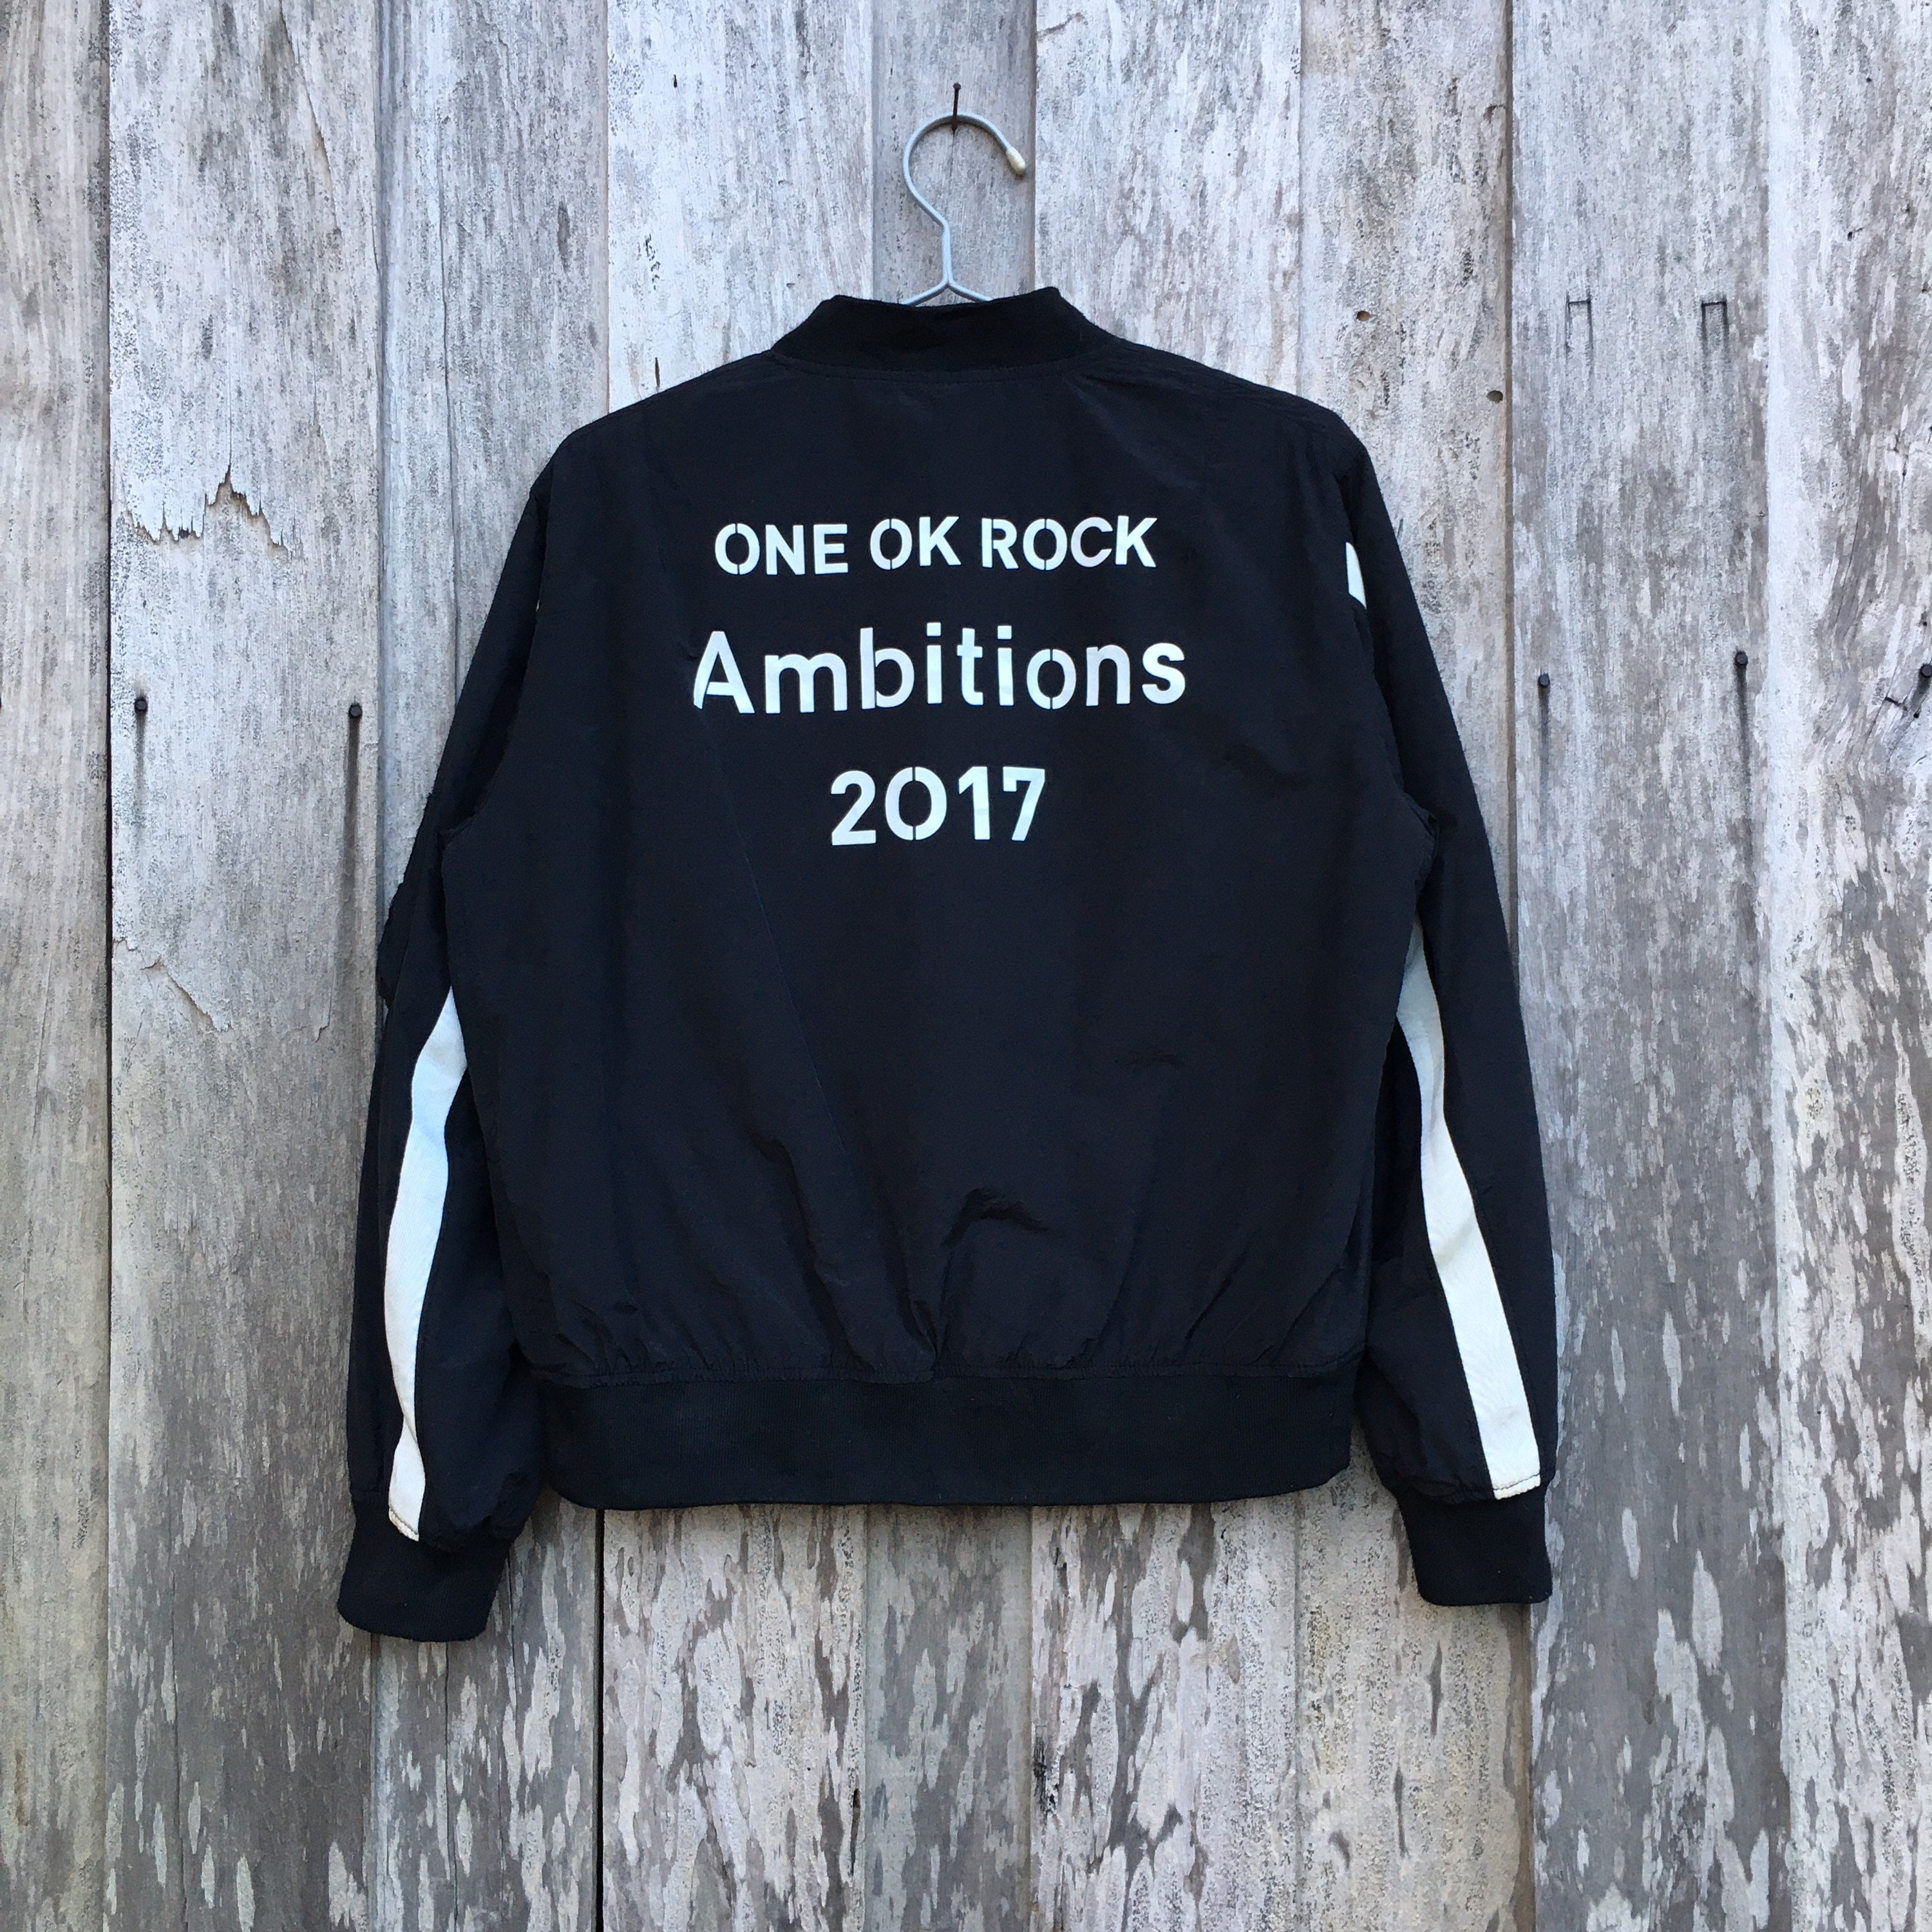 One OK Rock Ambitions 2017 Japan Tour Zip up Jacket - Etsy